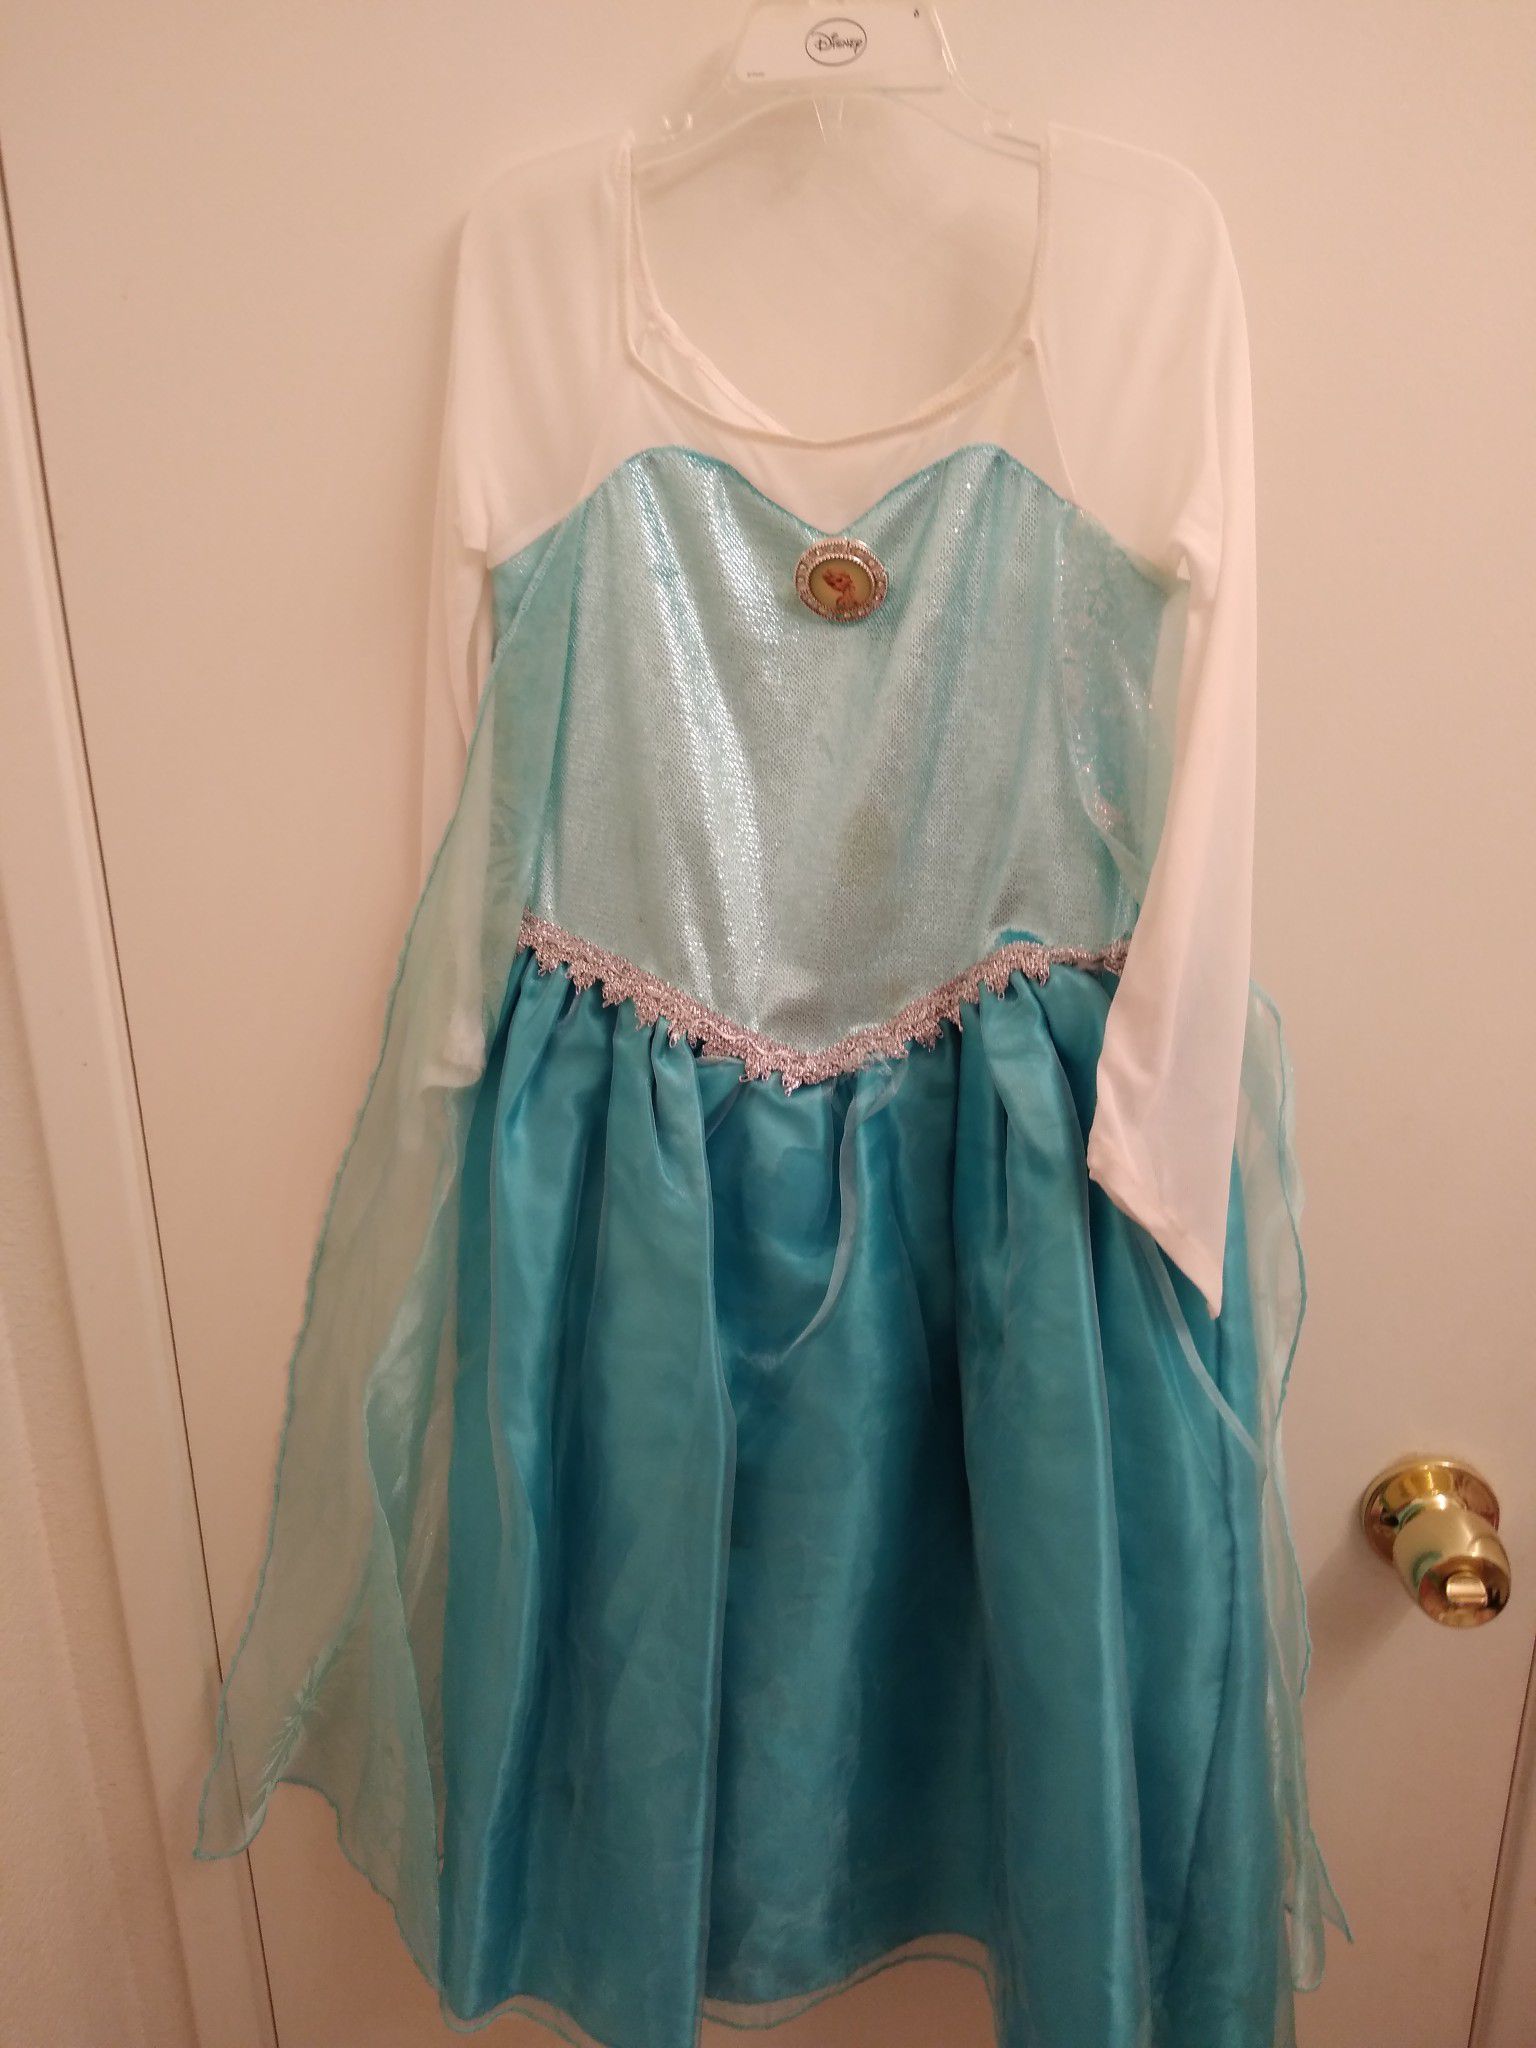 Disney Frozen Elsa costume princess dress